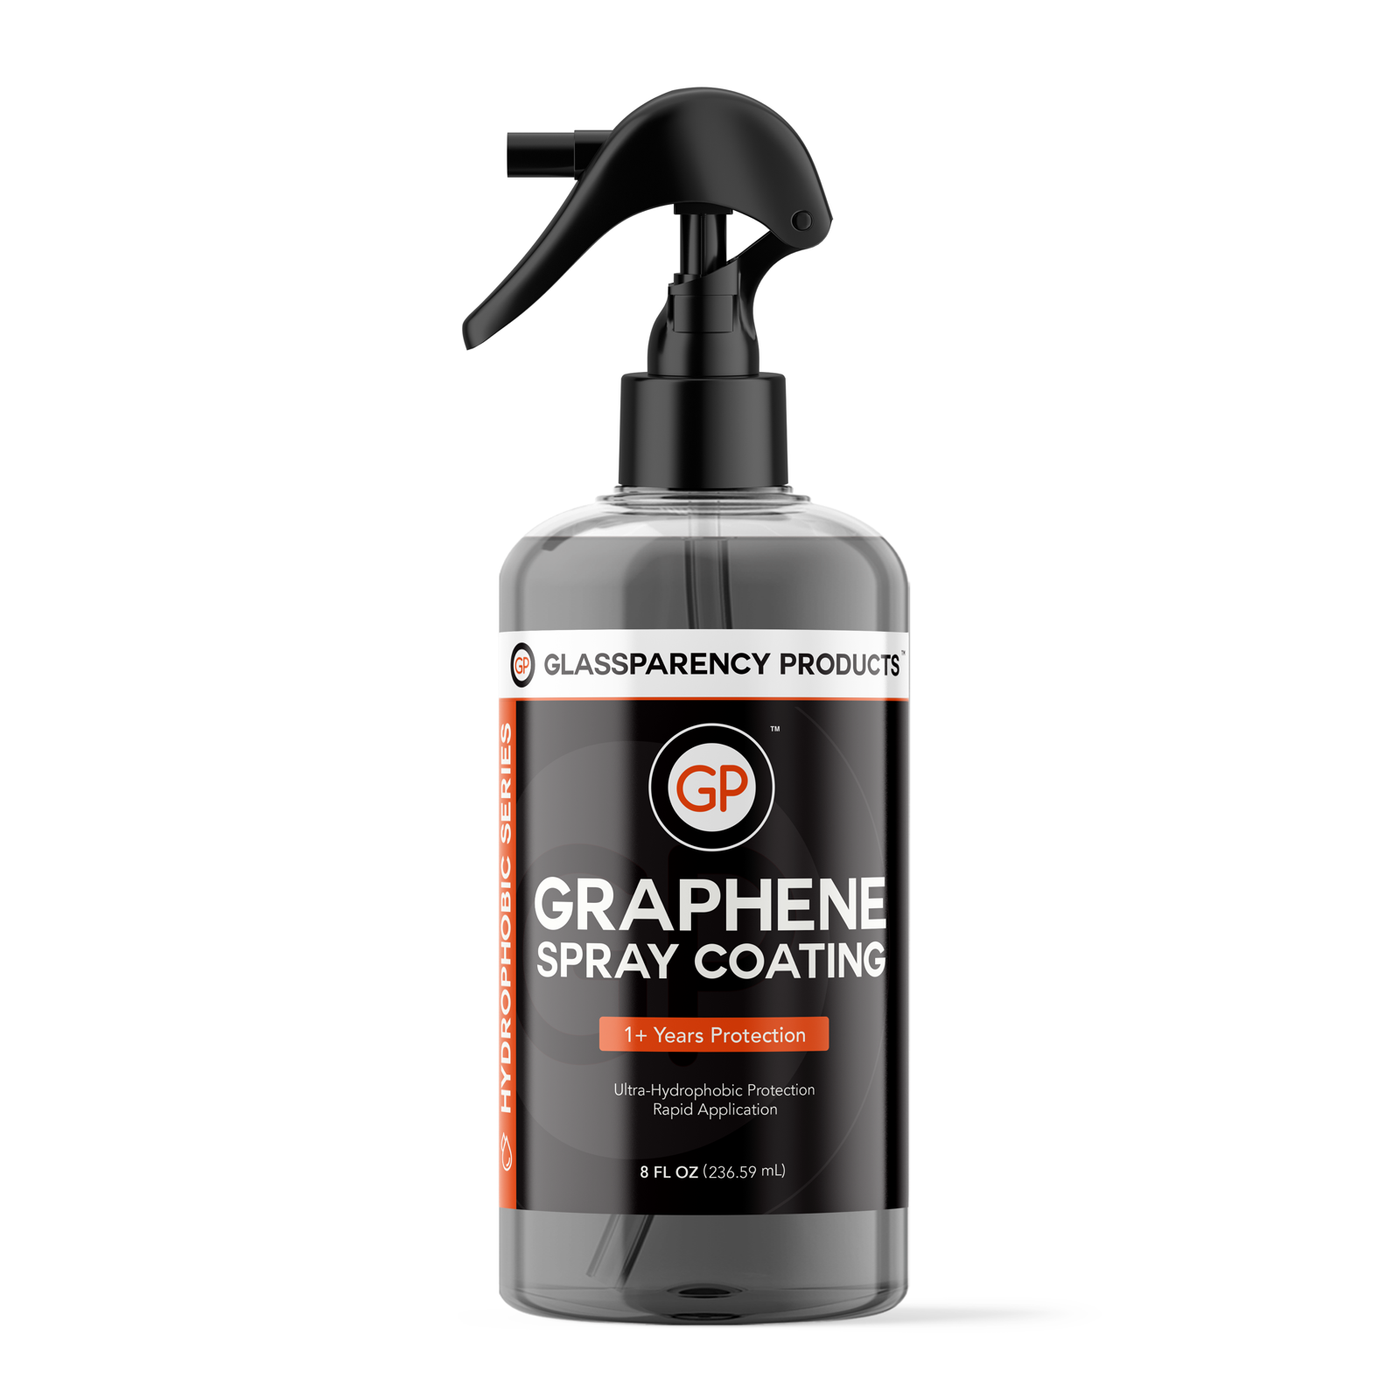 Review: Adams Graphene Spray Coating